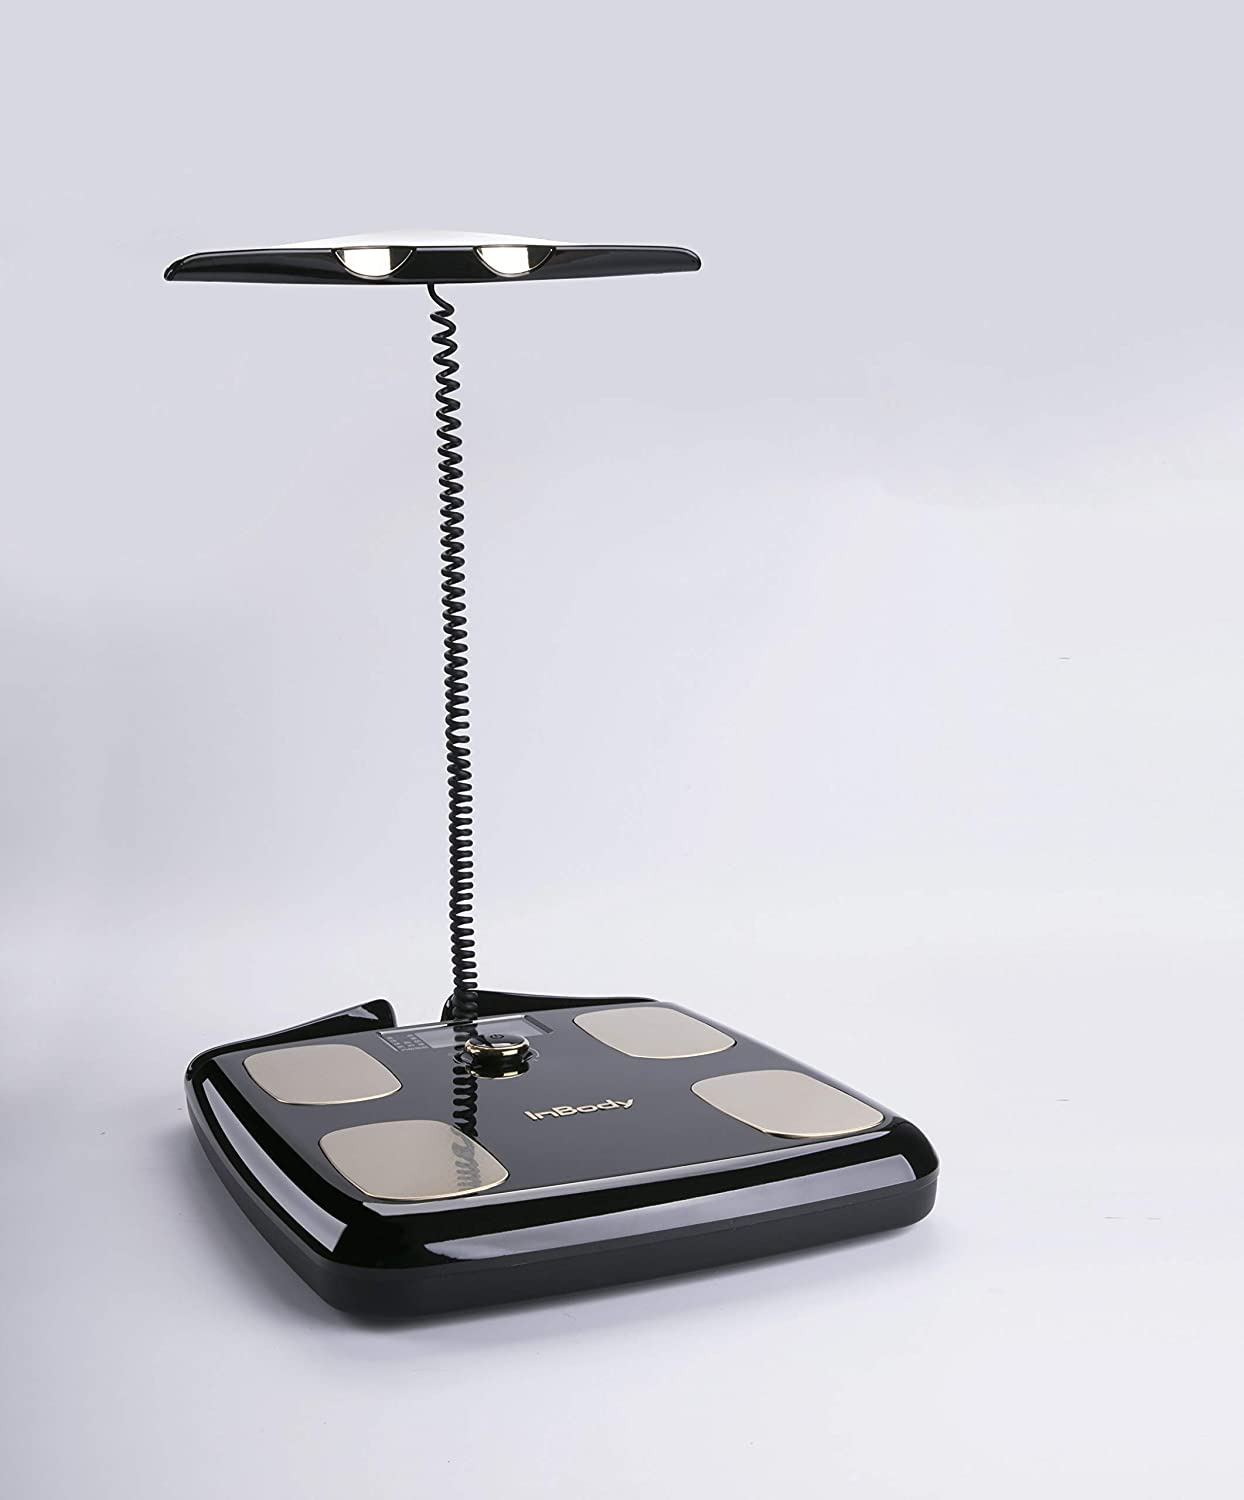 InBody H20N Smart Full Body Composition Analyzer Scale, Beige